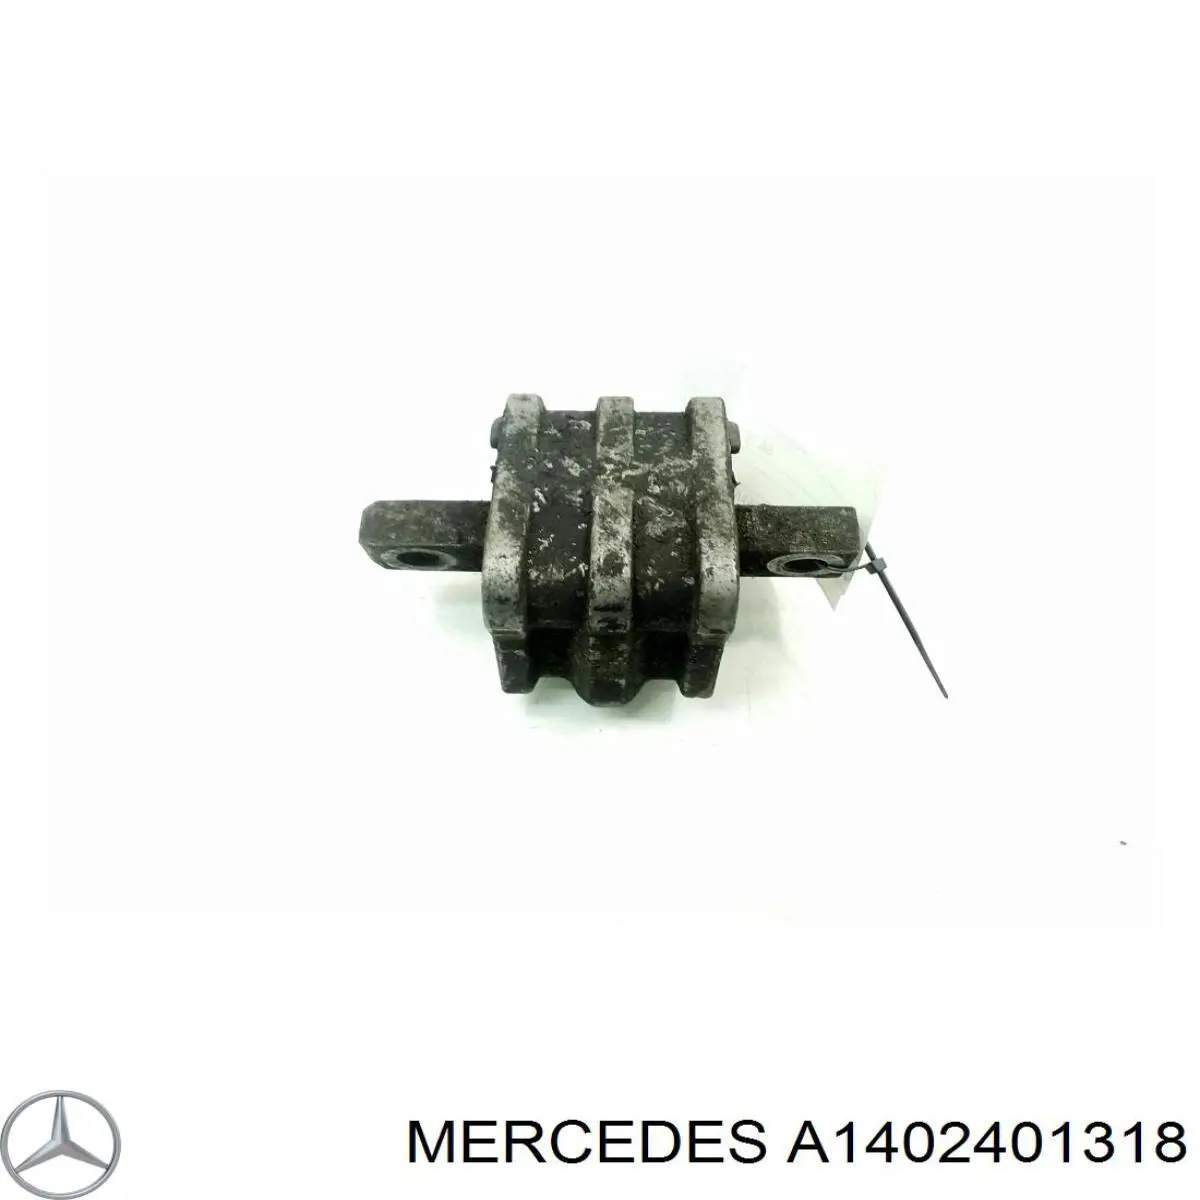 A1402401318 Mercedes подушка трансмиссии (опора коробки передач)